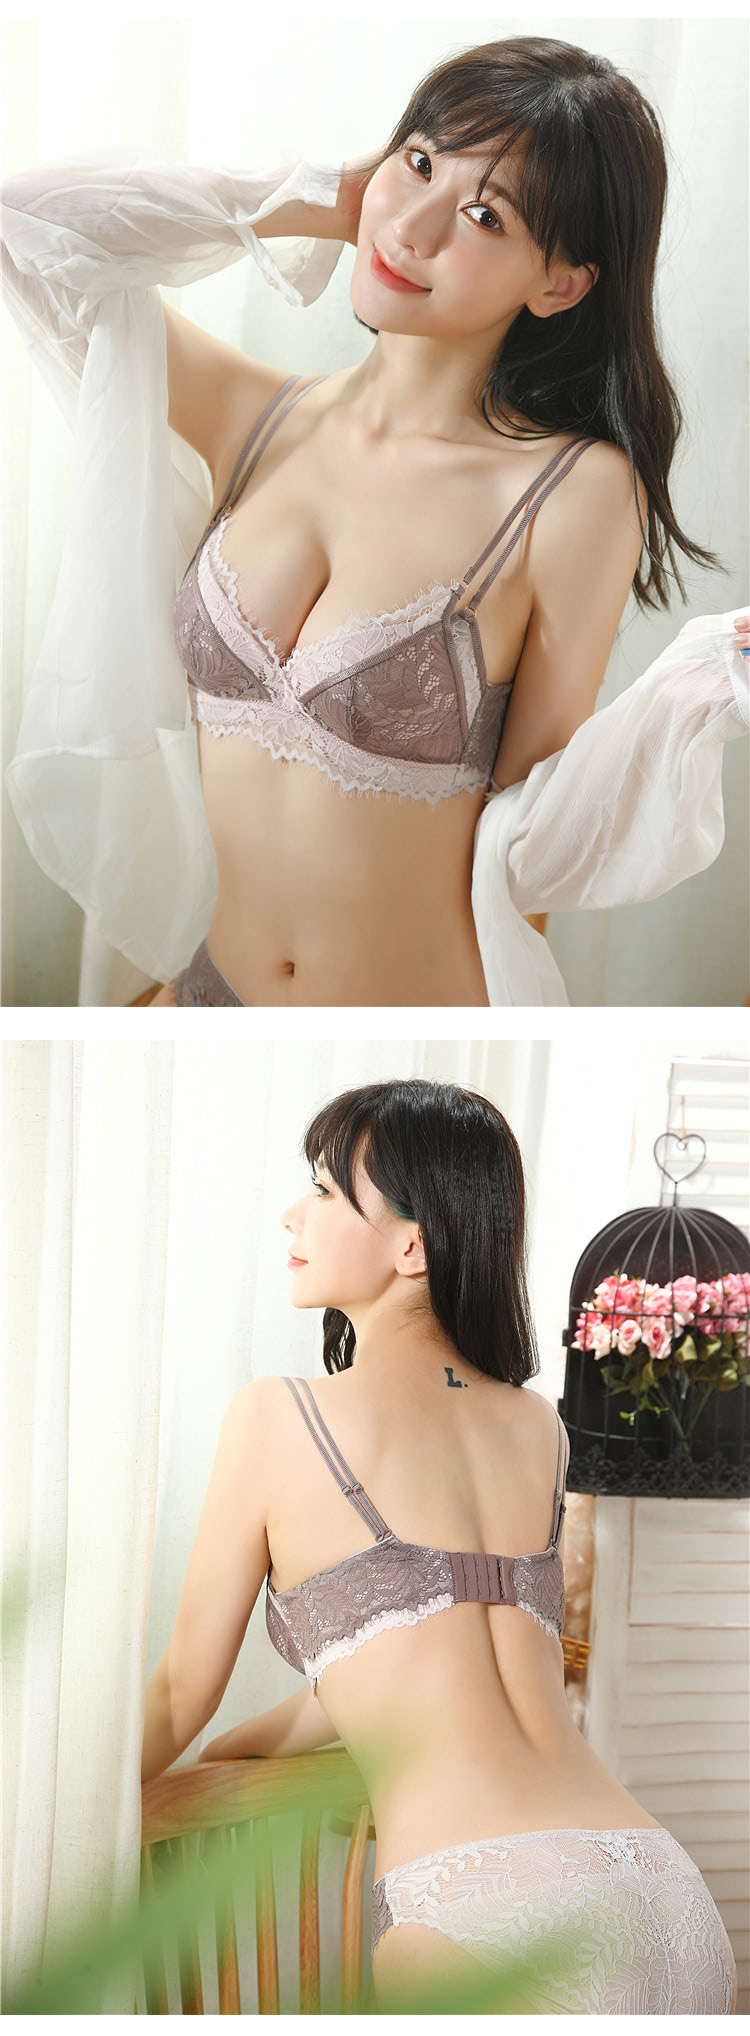 Sexy-Beautiful-Lingerie-Set-Lace-Underwear-Bra-and-Panty16.jpg